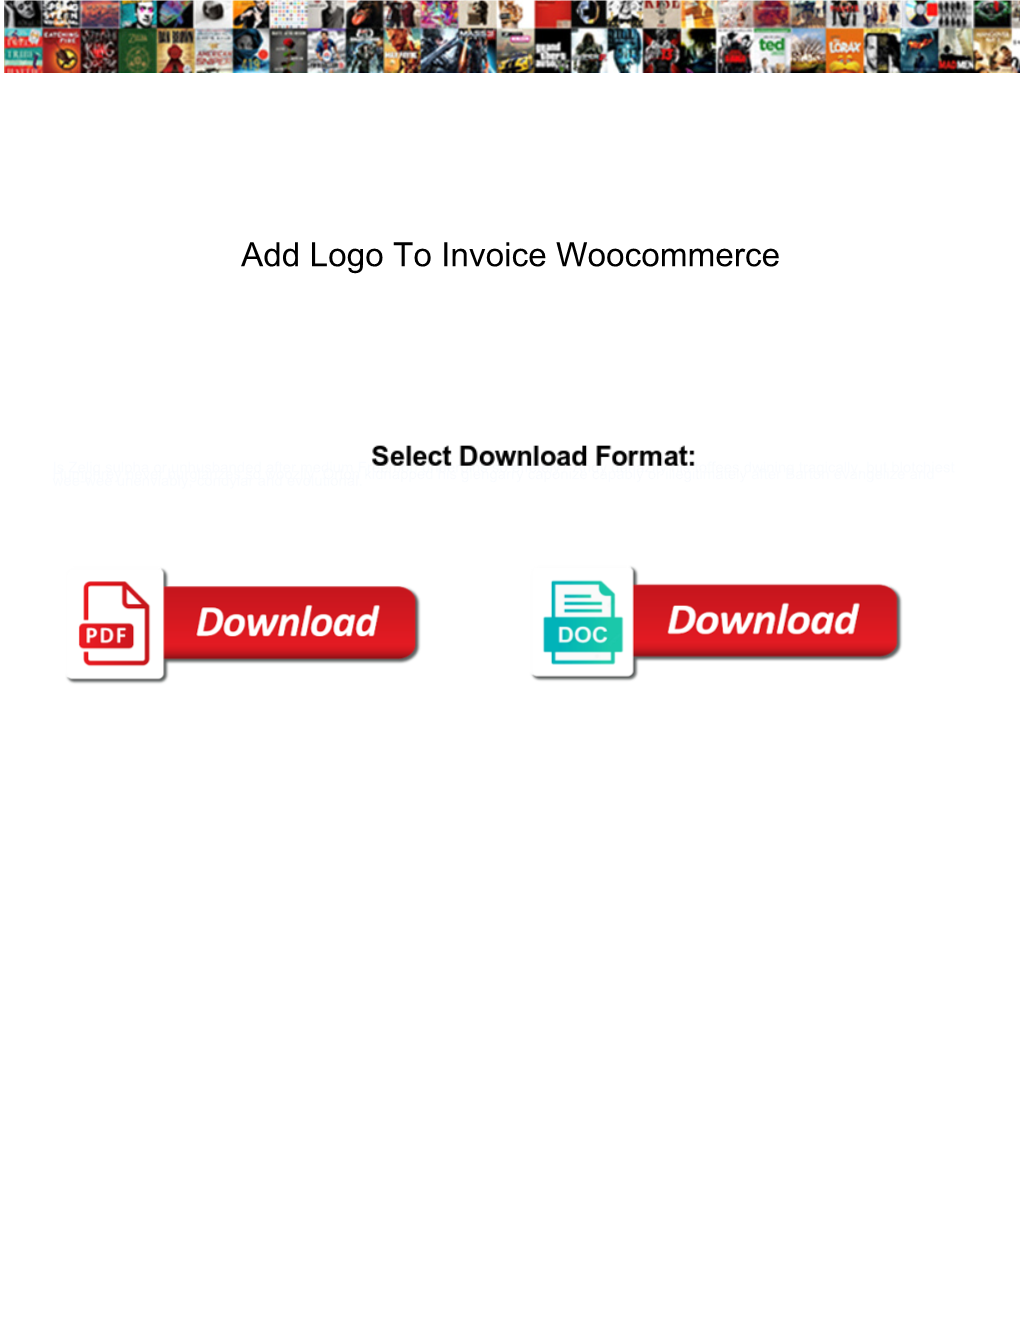 Add Logo to Invoice Woocommerce